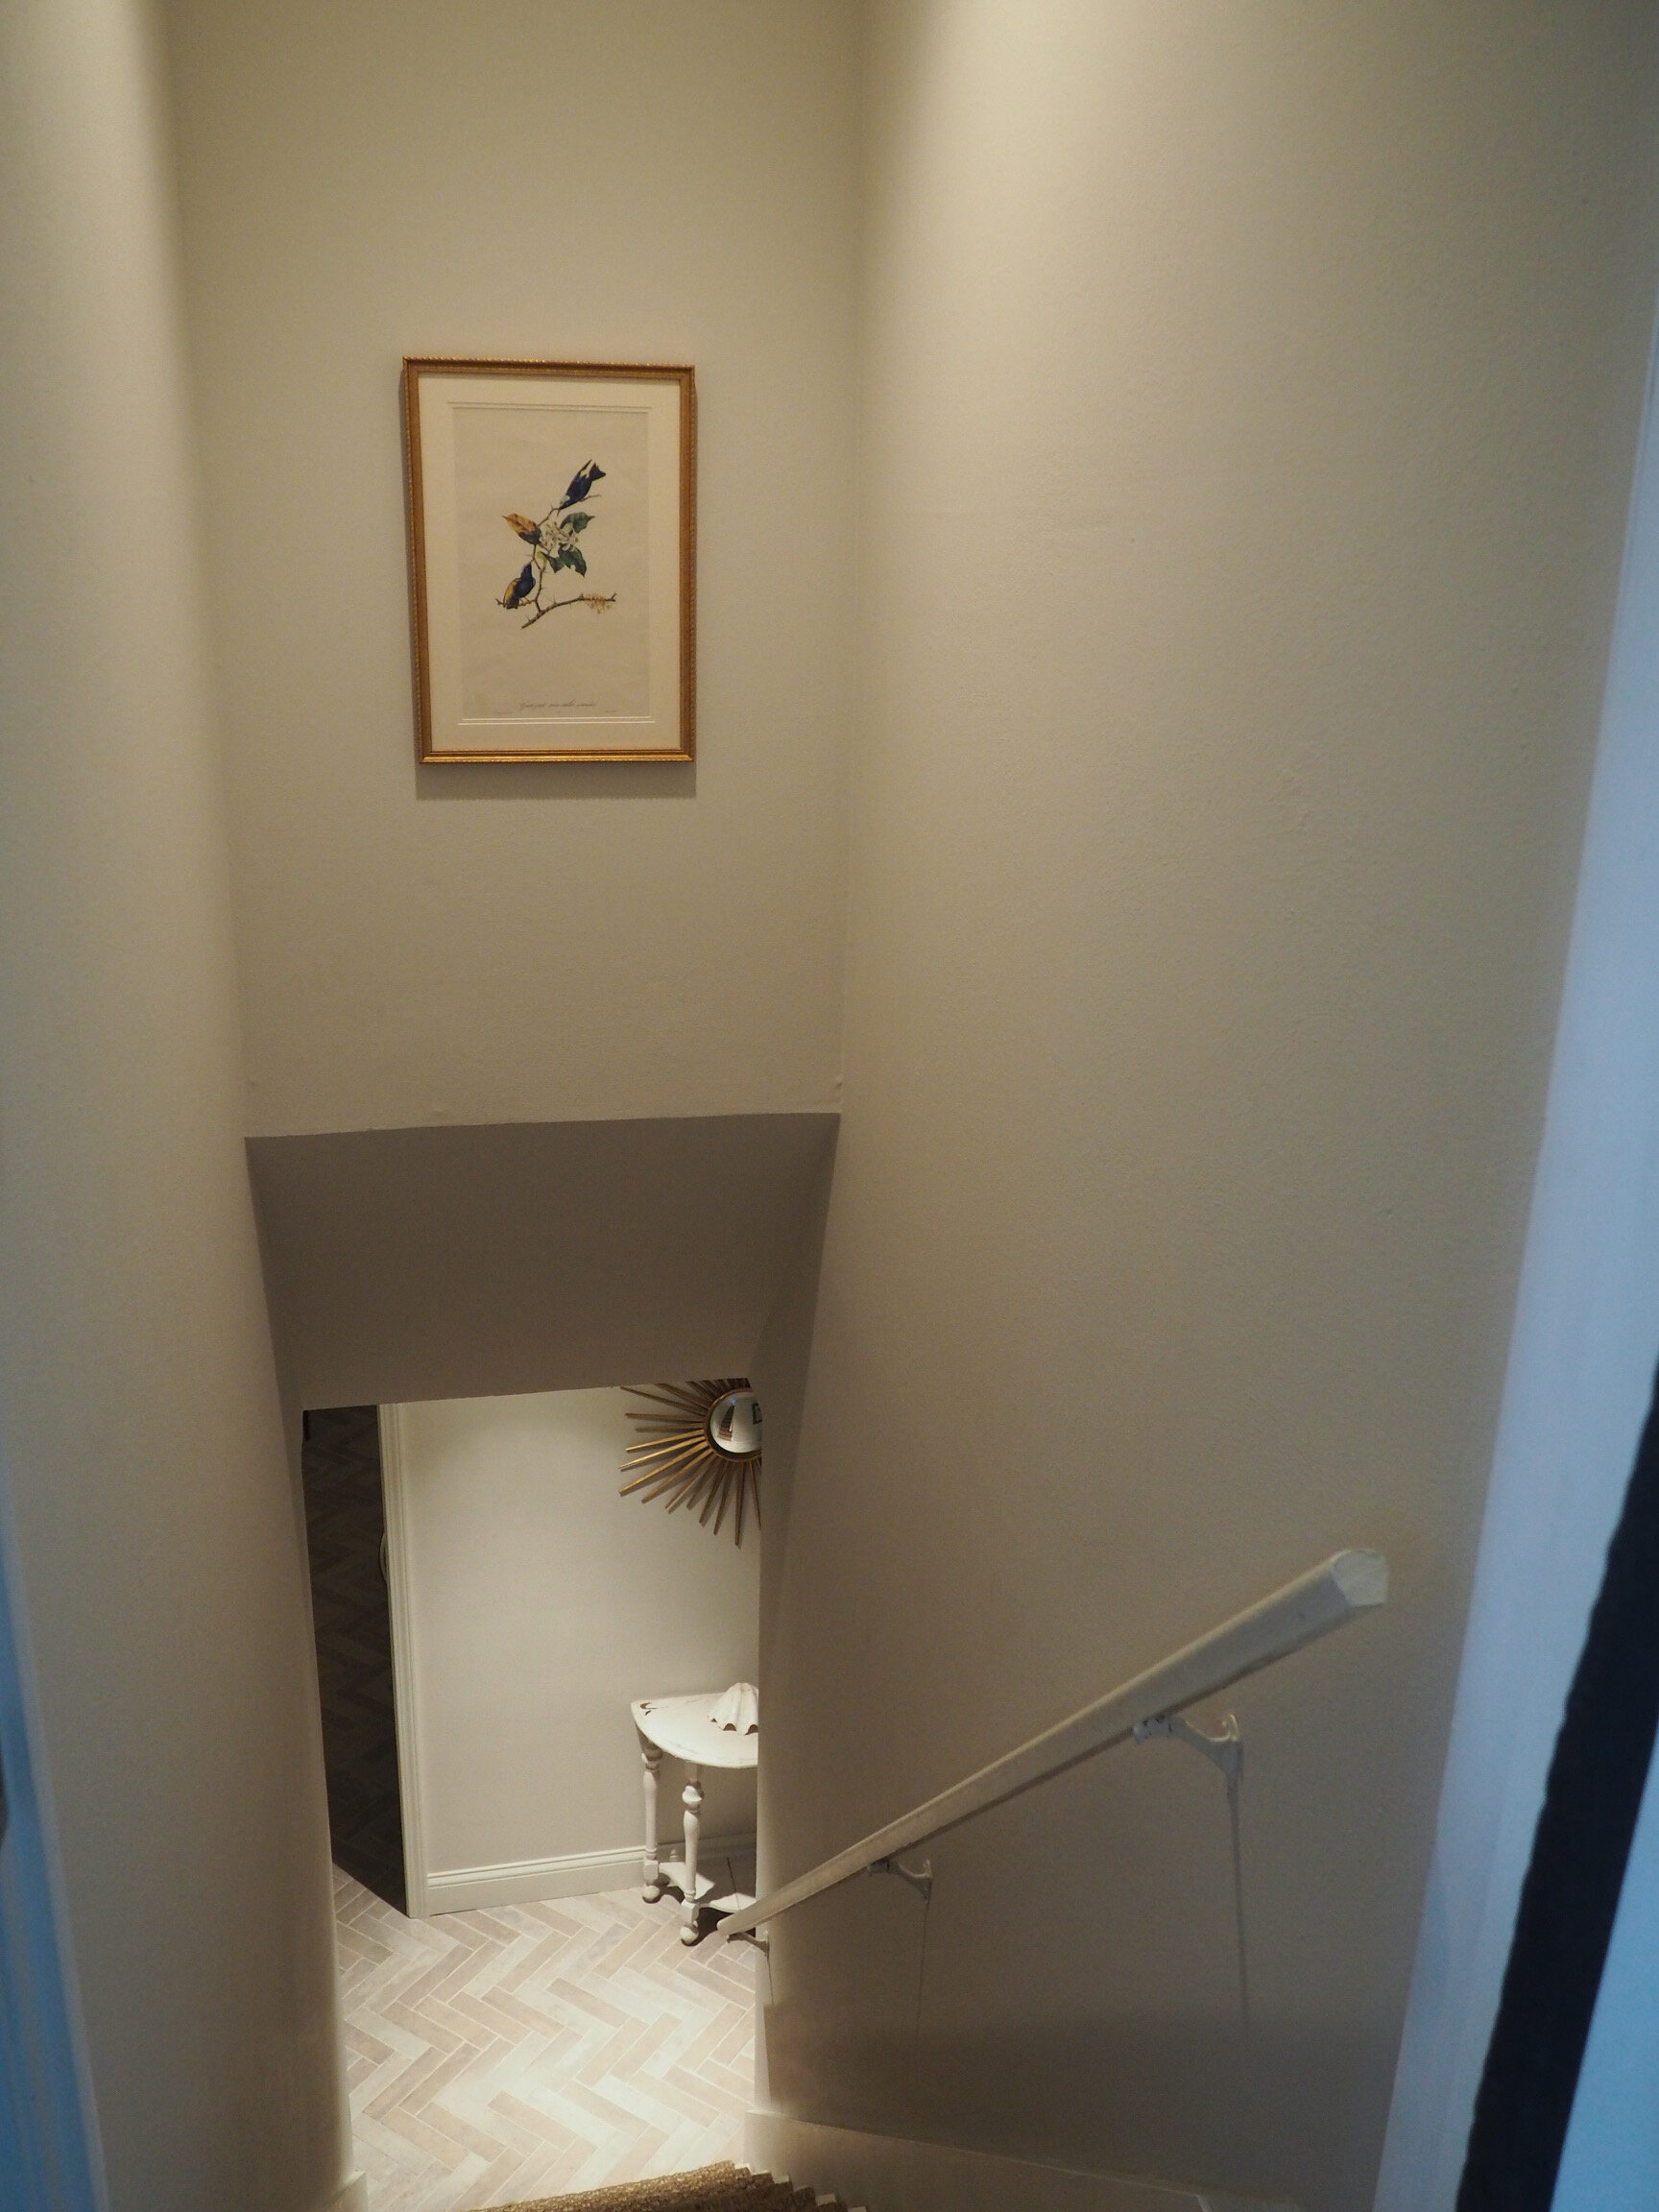 A pretty framed Audubon bird print in the stairwell